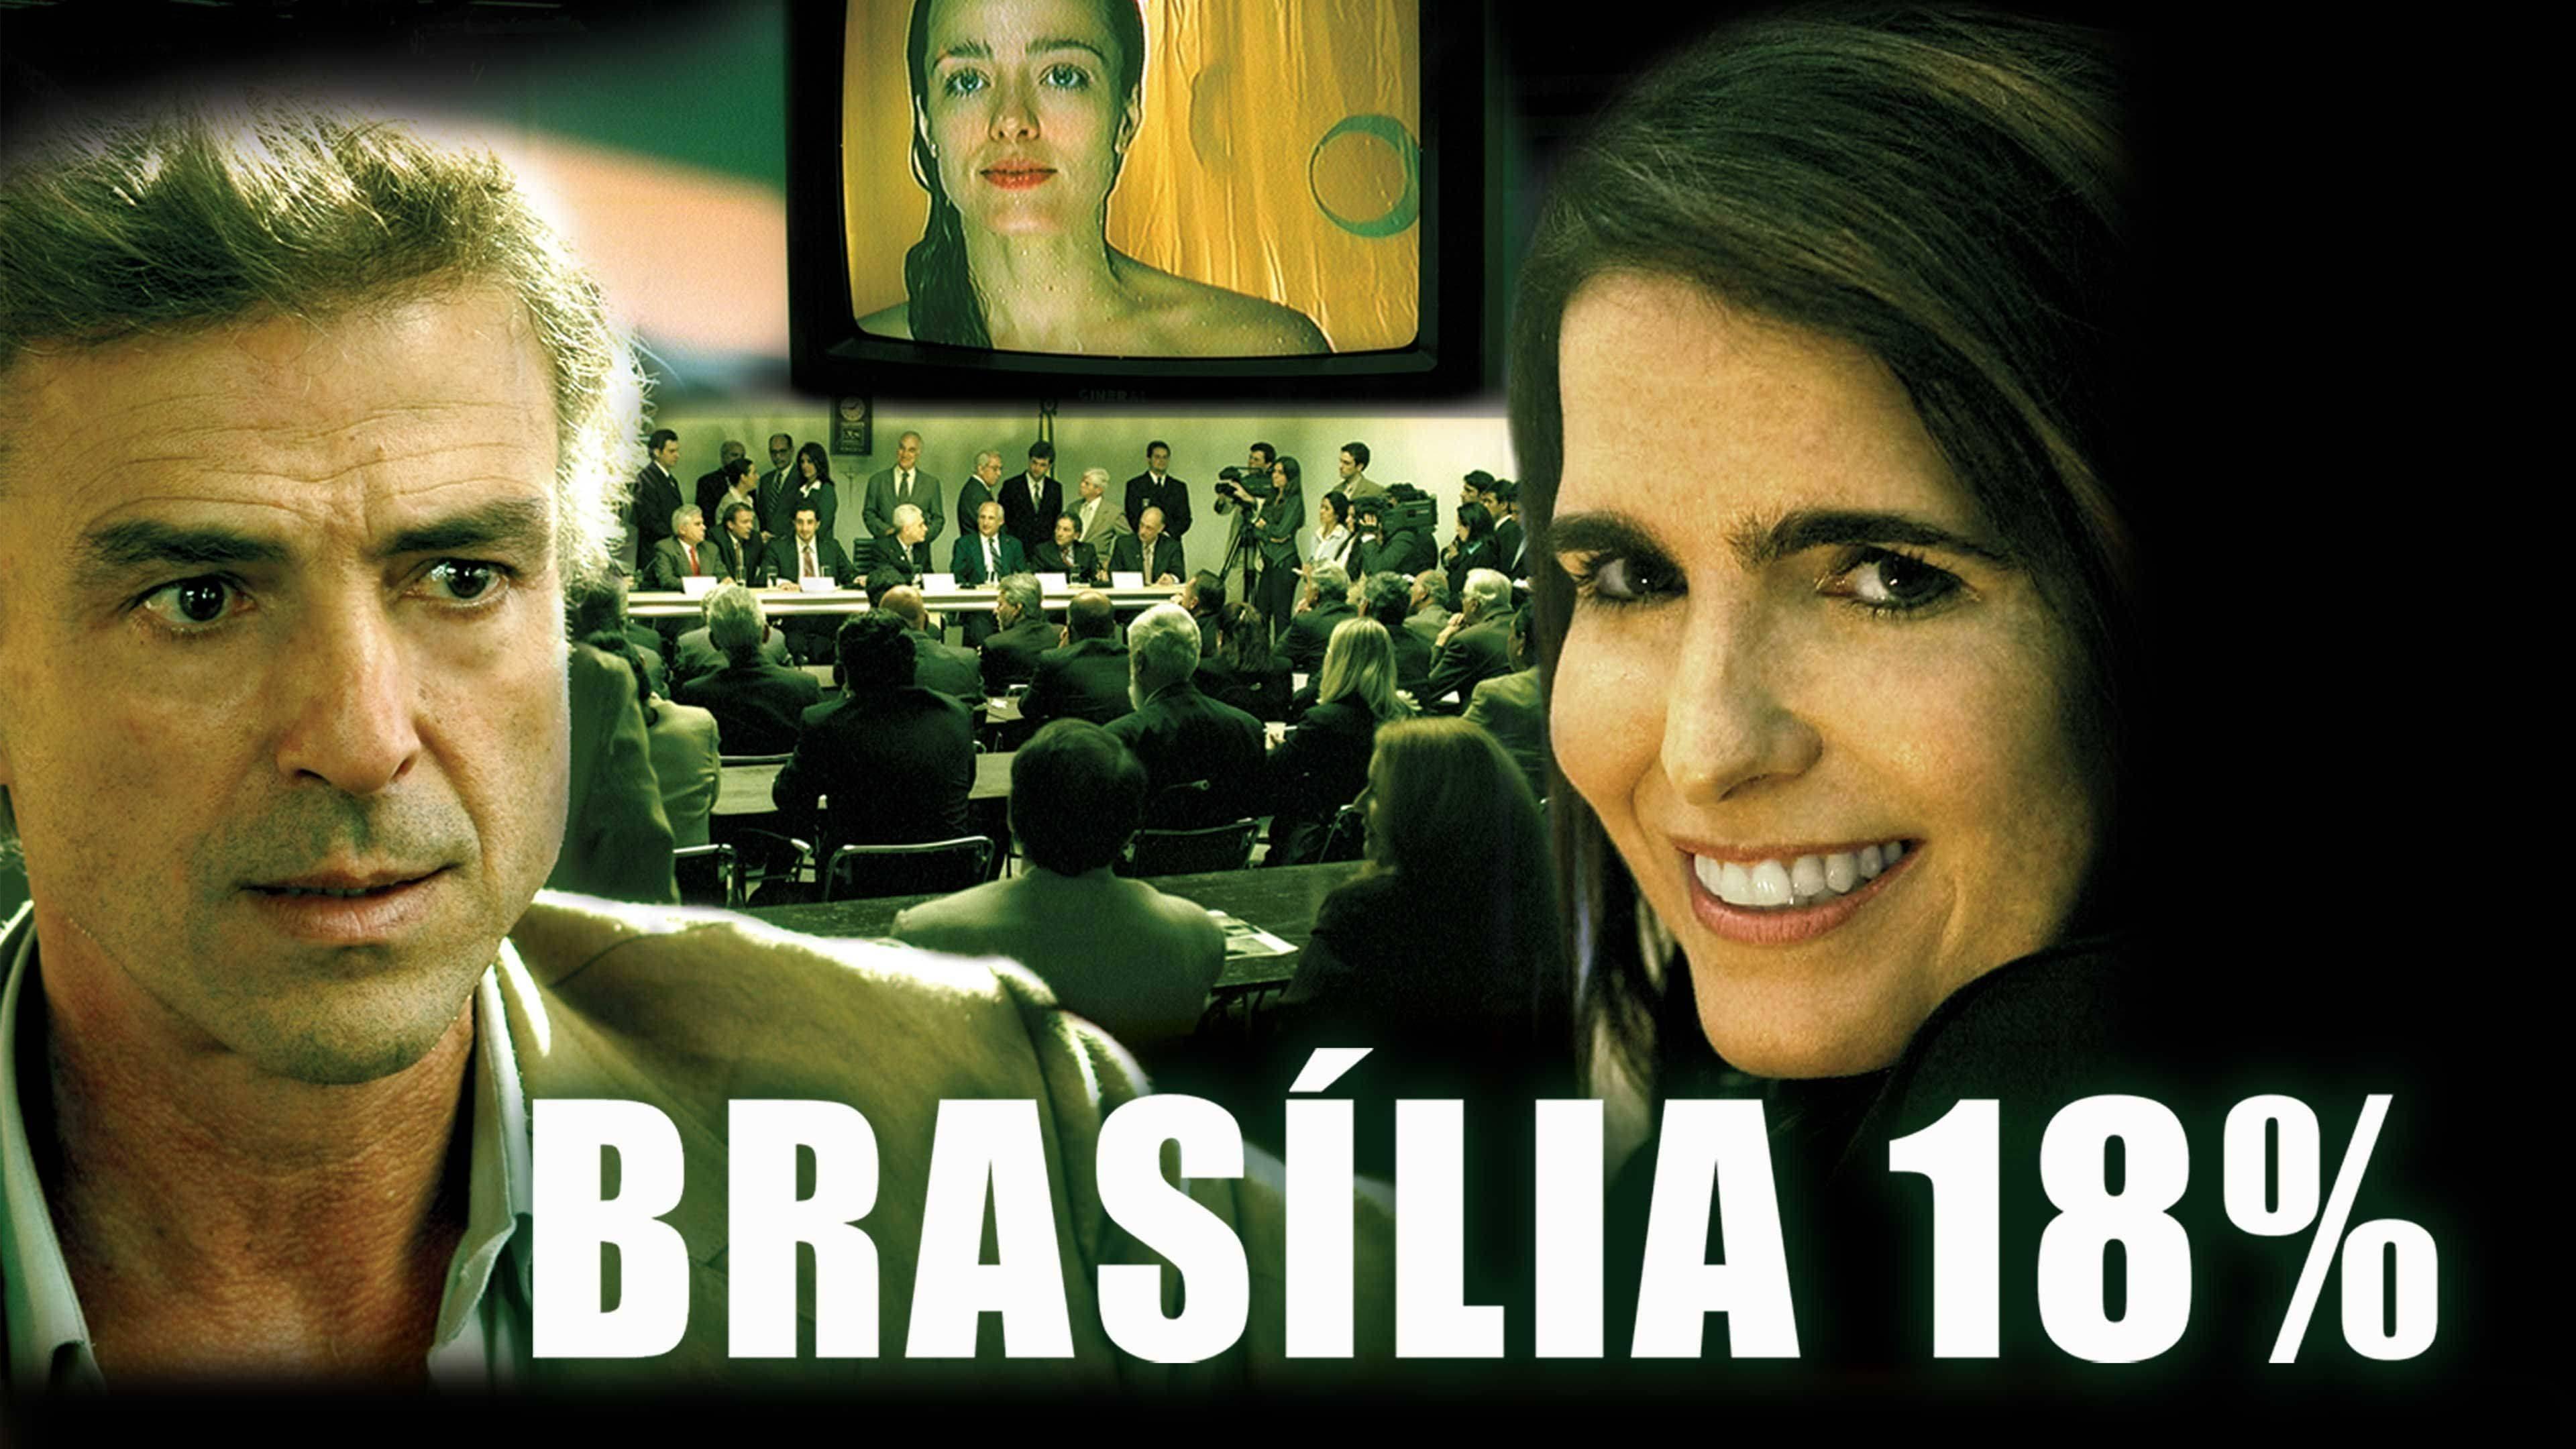 Brasília 18% backdrop